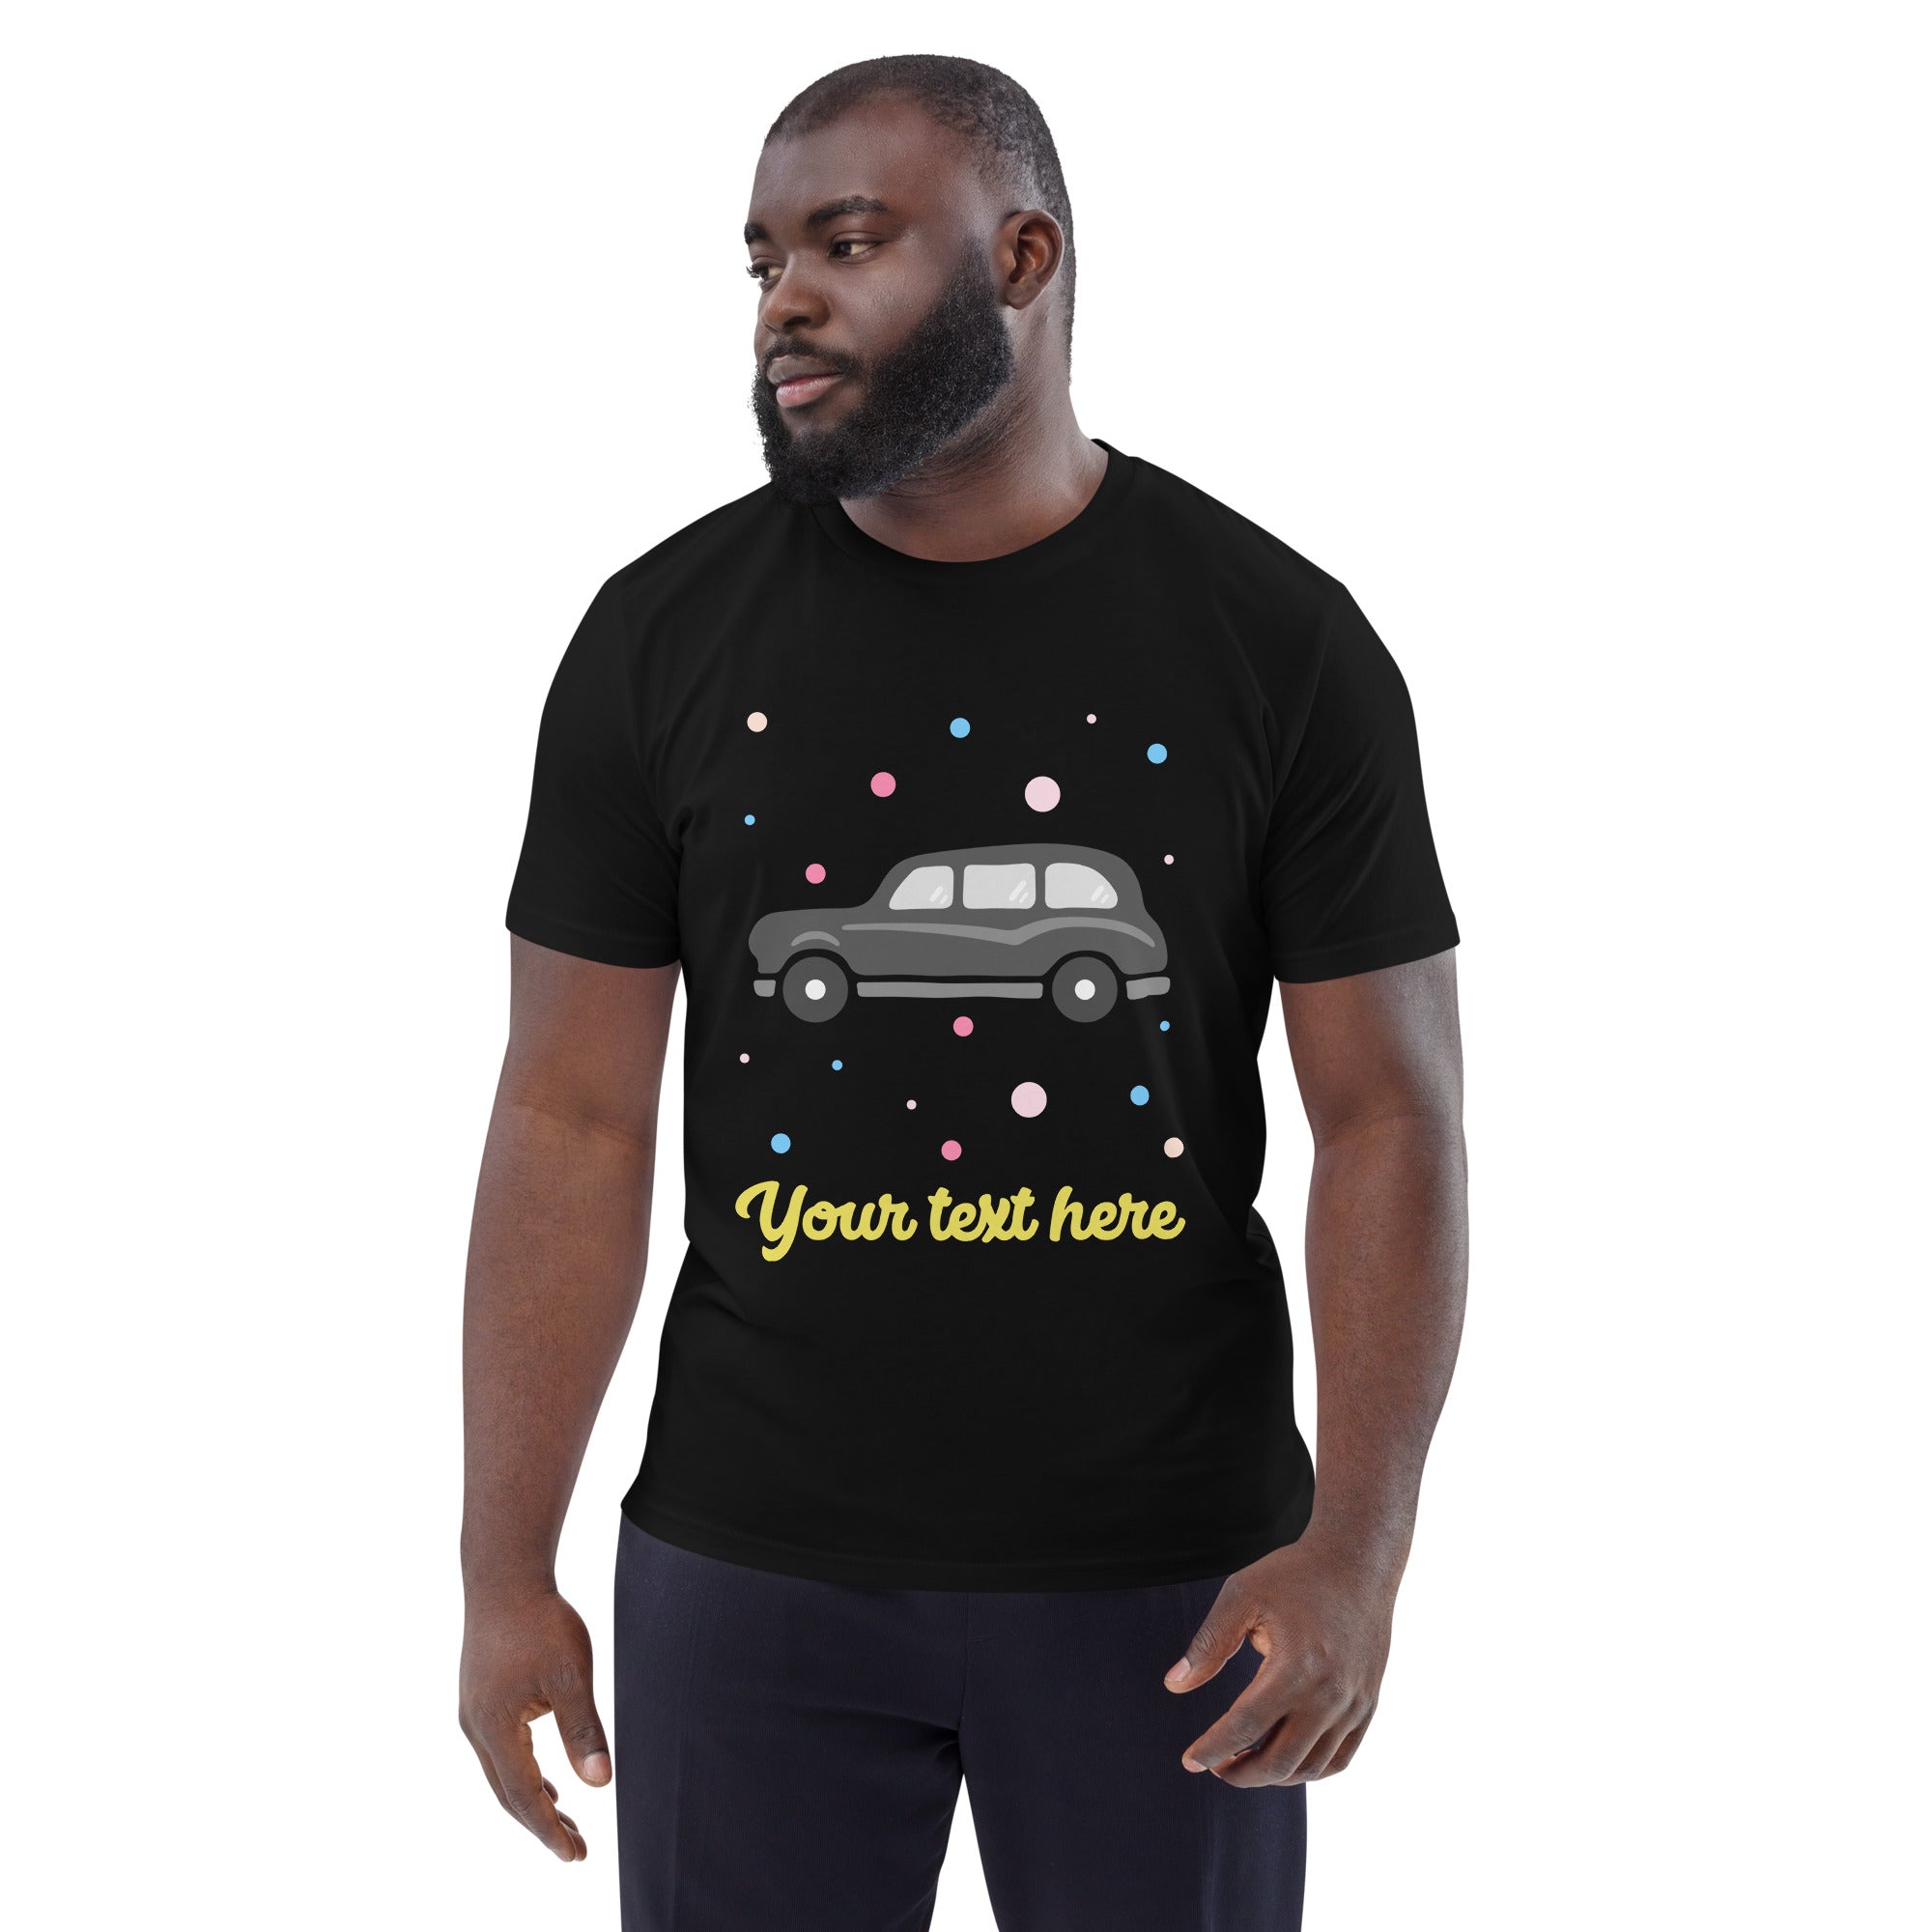 Personalised Custom Text - Organic Cotton Adults Unisex T-Shirt - London Doodles - Black Taxi - Black 2